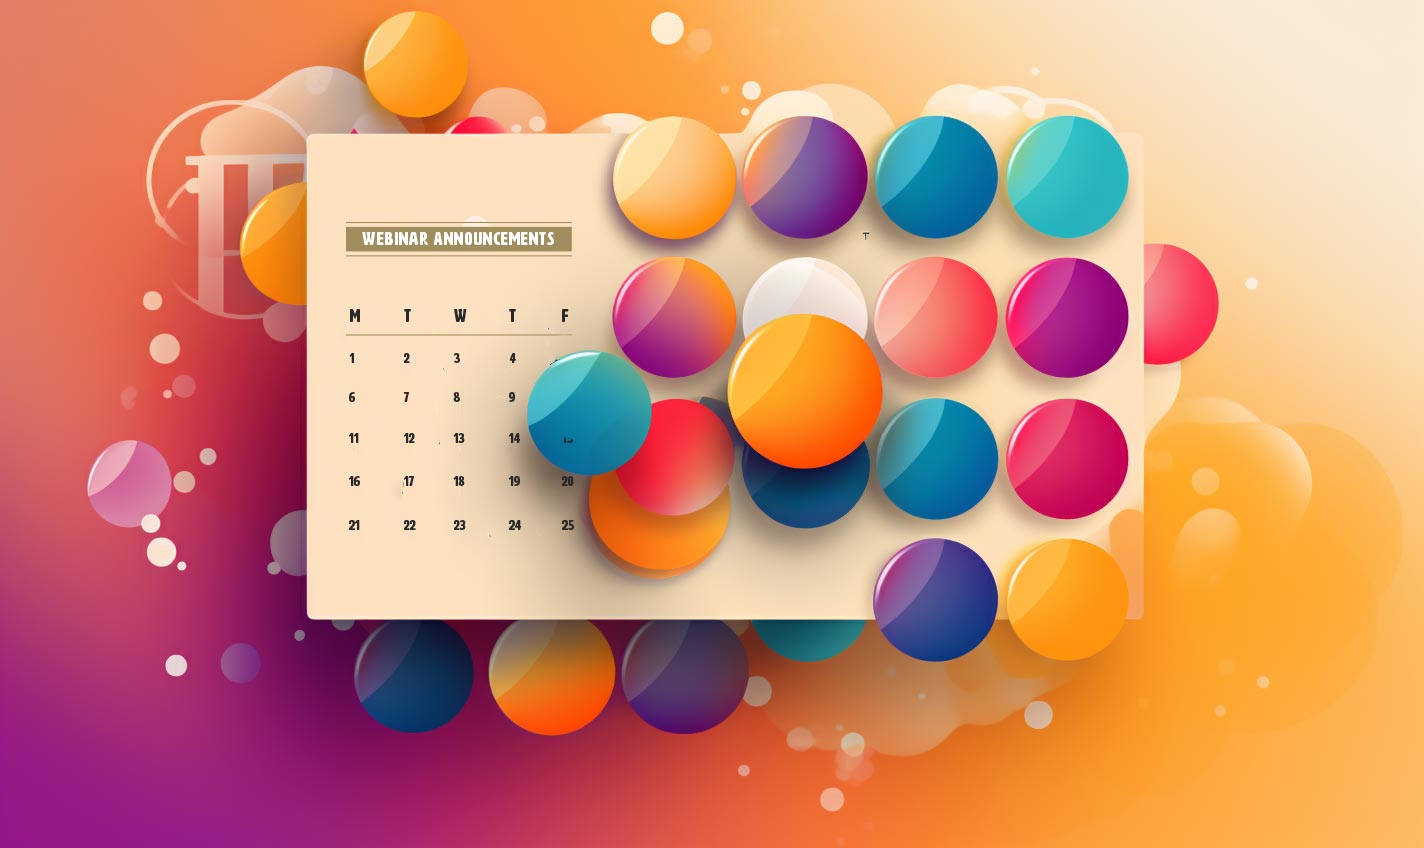 Calendar representing the best time to host webinars